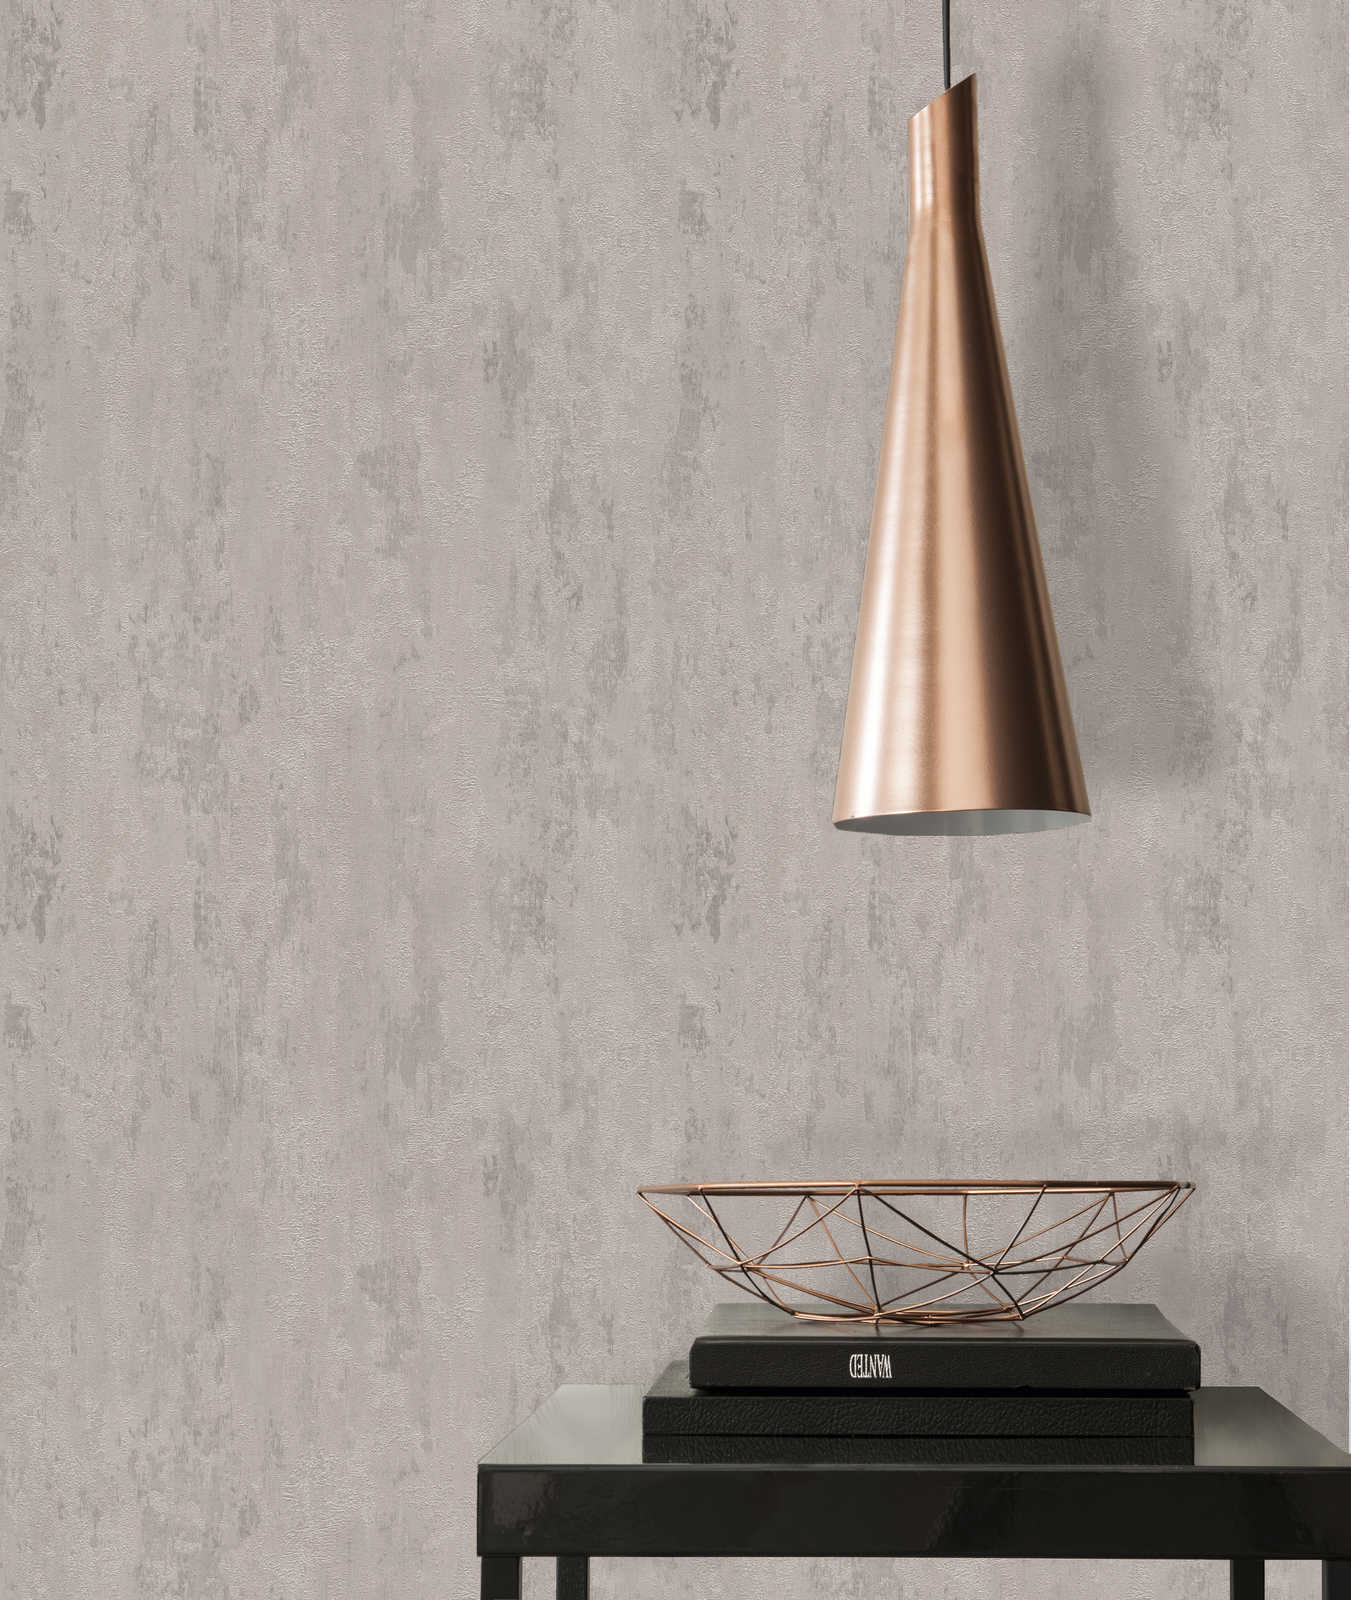             Wallpaper industrial style with texture effect - cream, grey, metallic
        